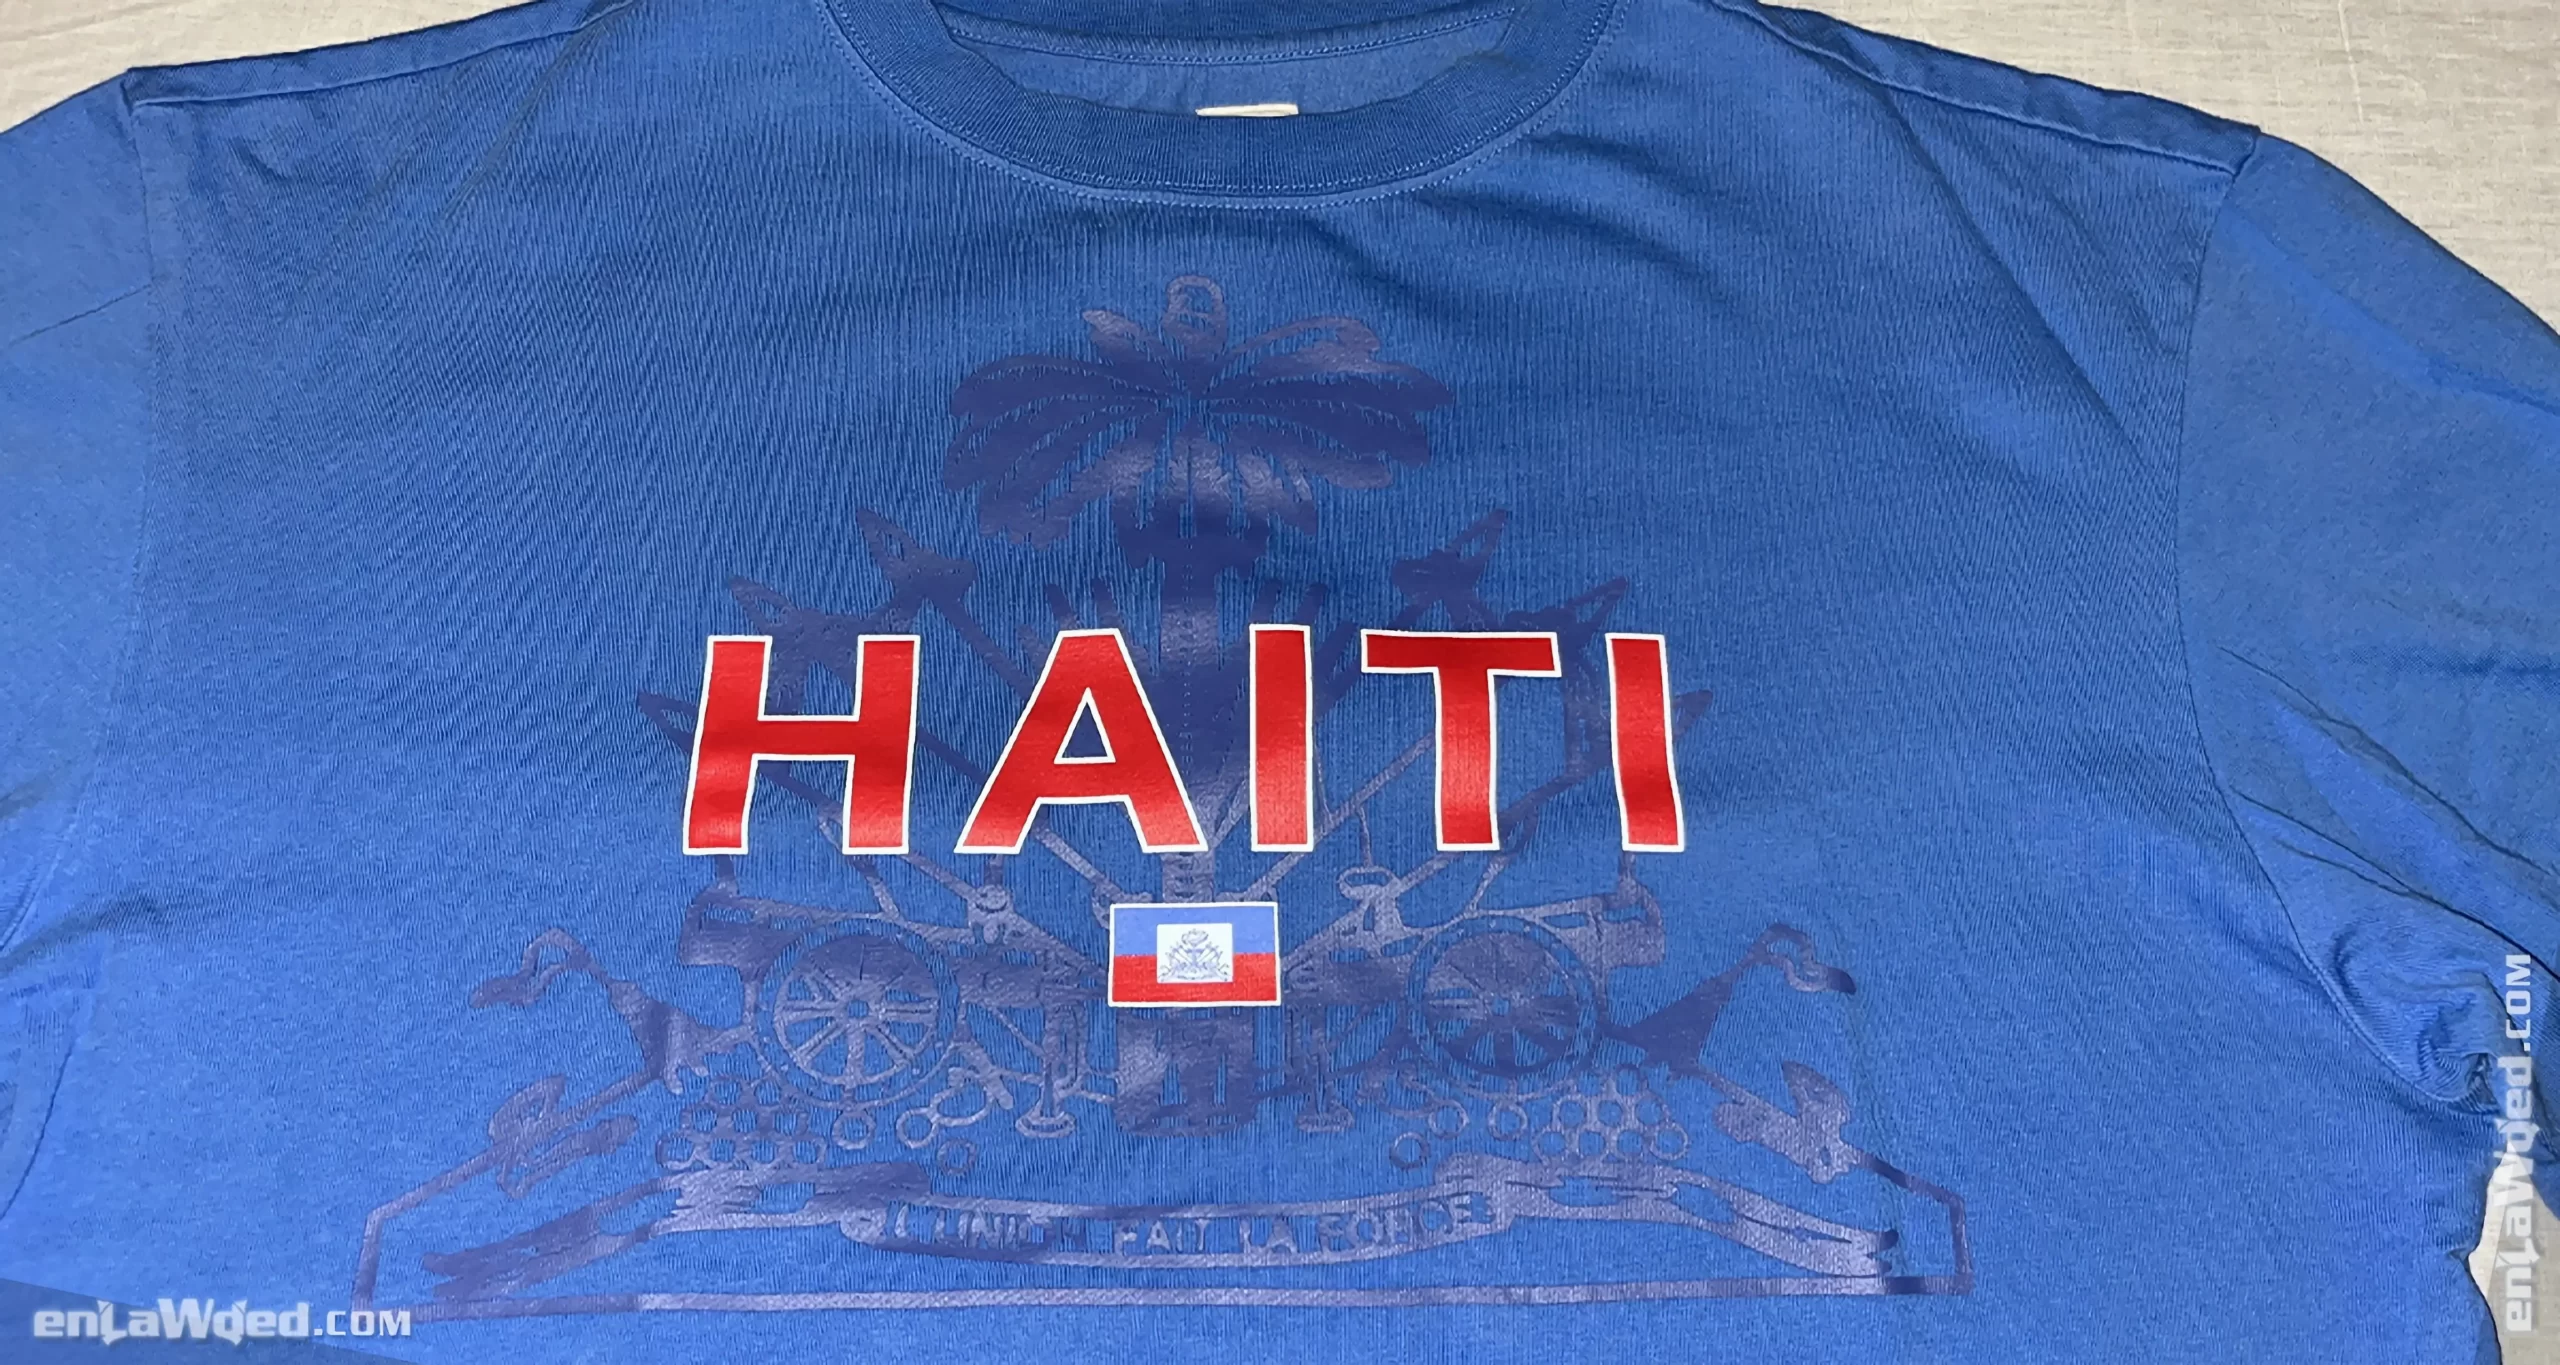 Men’s 2007 Haiti T-Shirt by Adidas Originals: Uplifted (EnLawded.com file #lp1n7y401262002r467pbl6a)